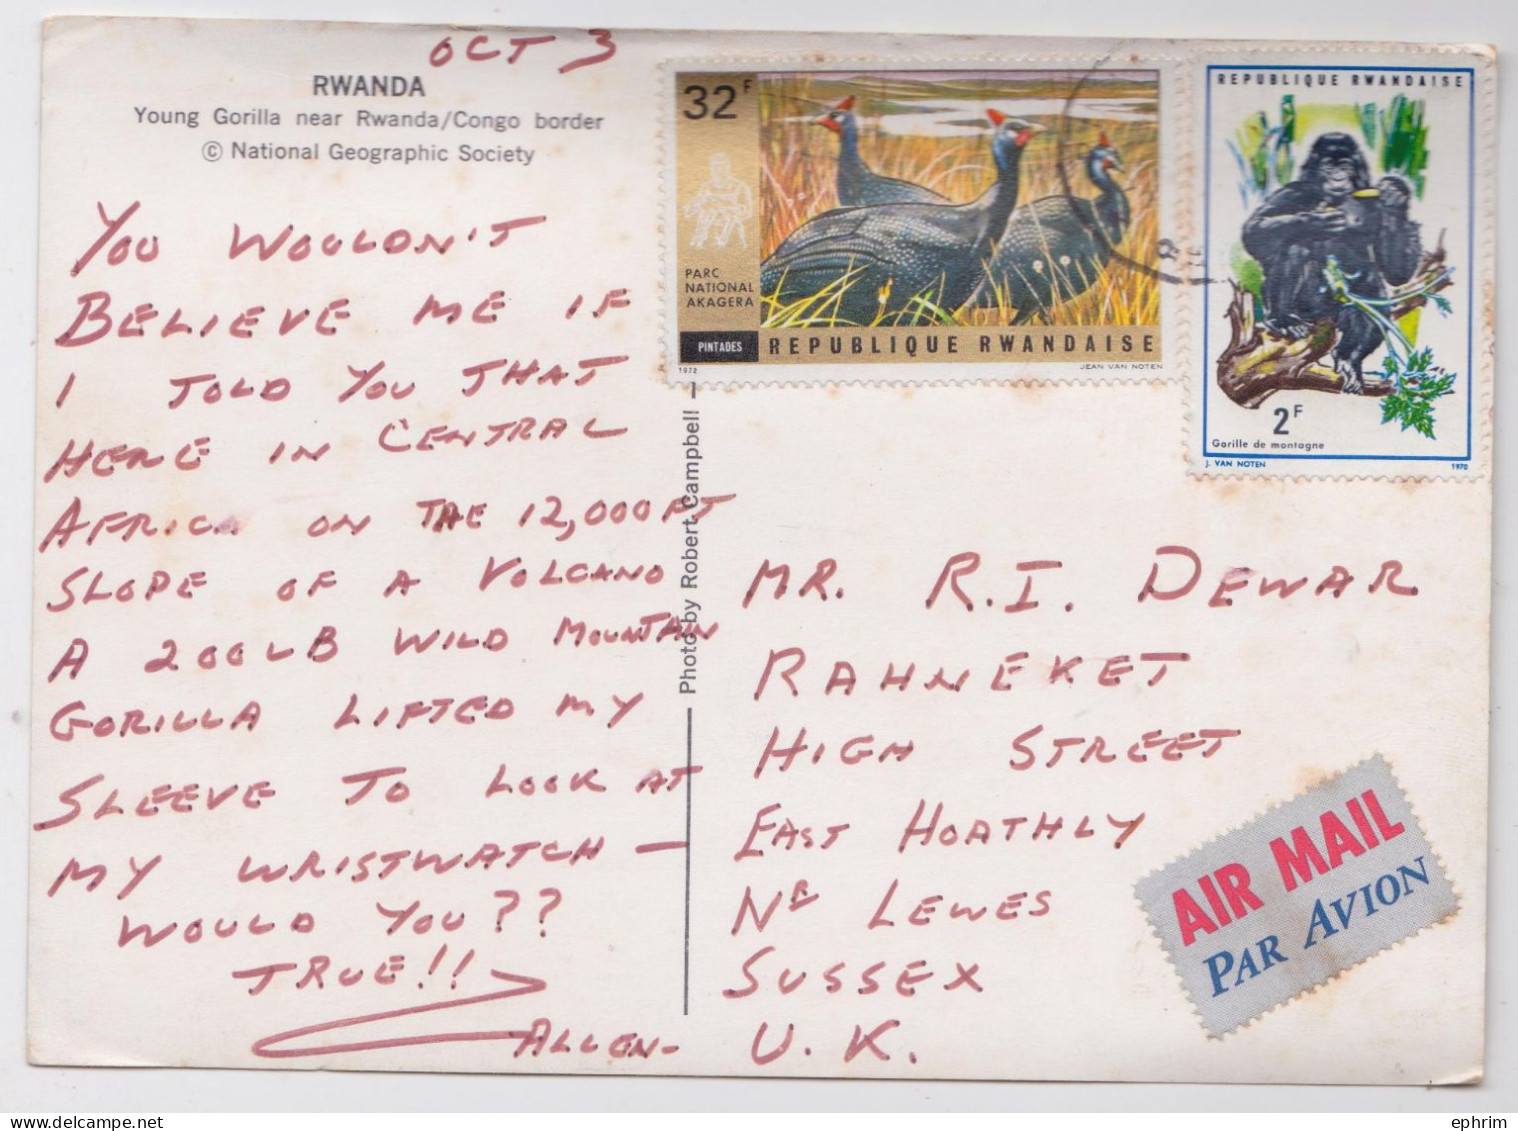 Rwanda Ruanda Carte Postale Timbre Parc National Gorille Gorilla Stamp 1970 Air Mail Postcard - Cartas & Documentos